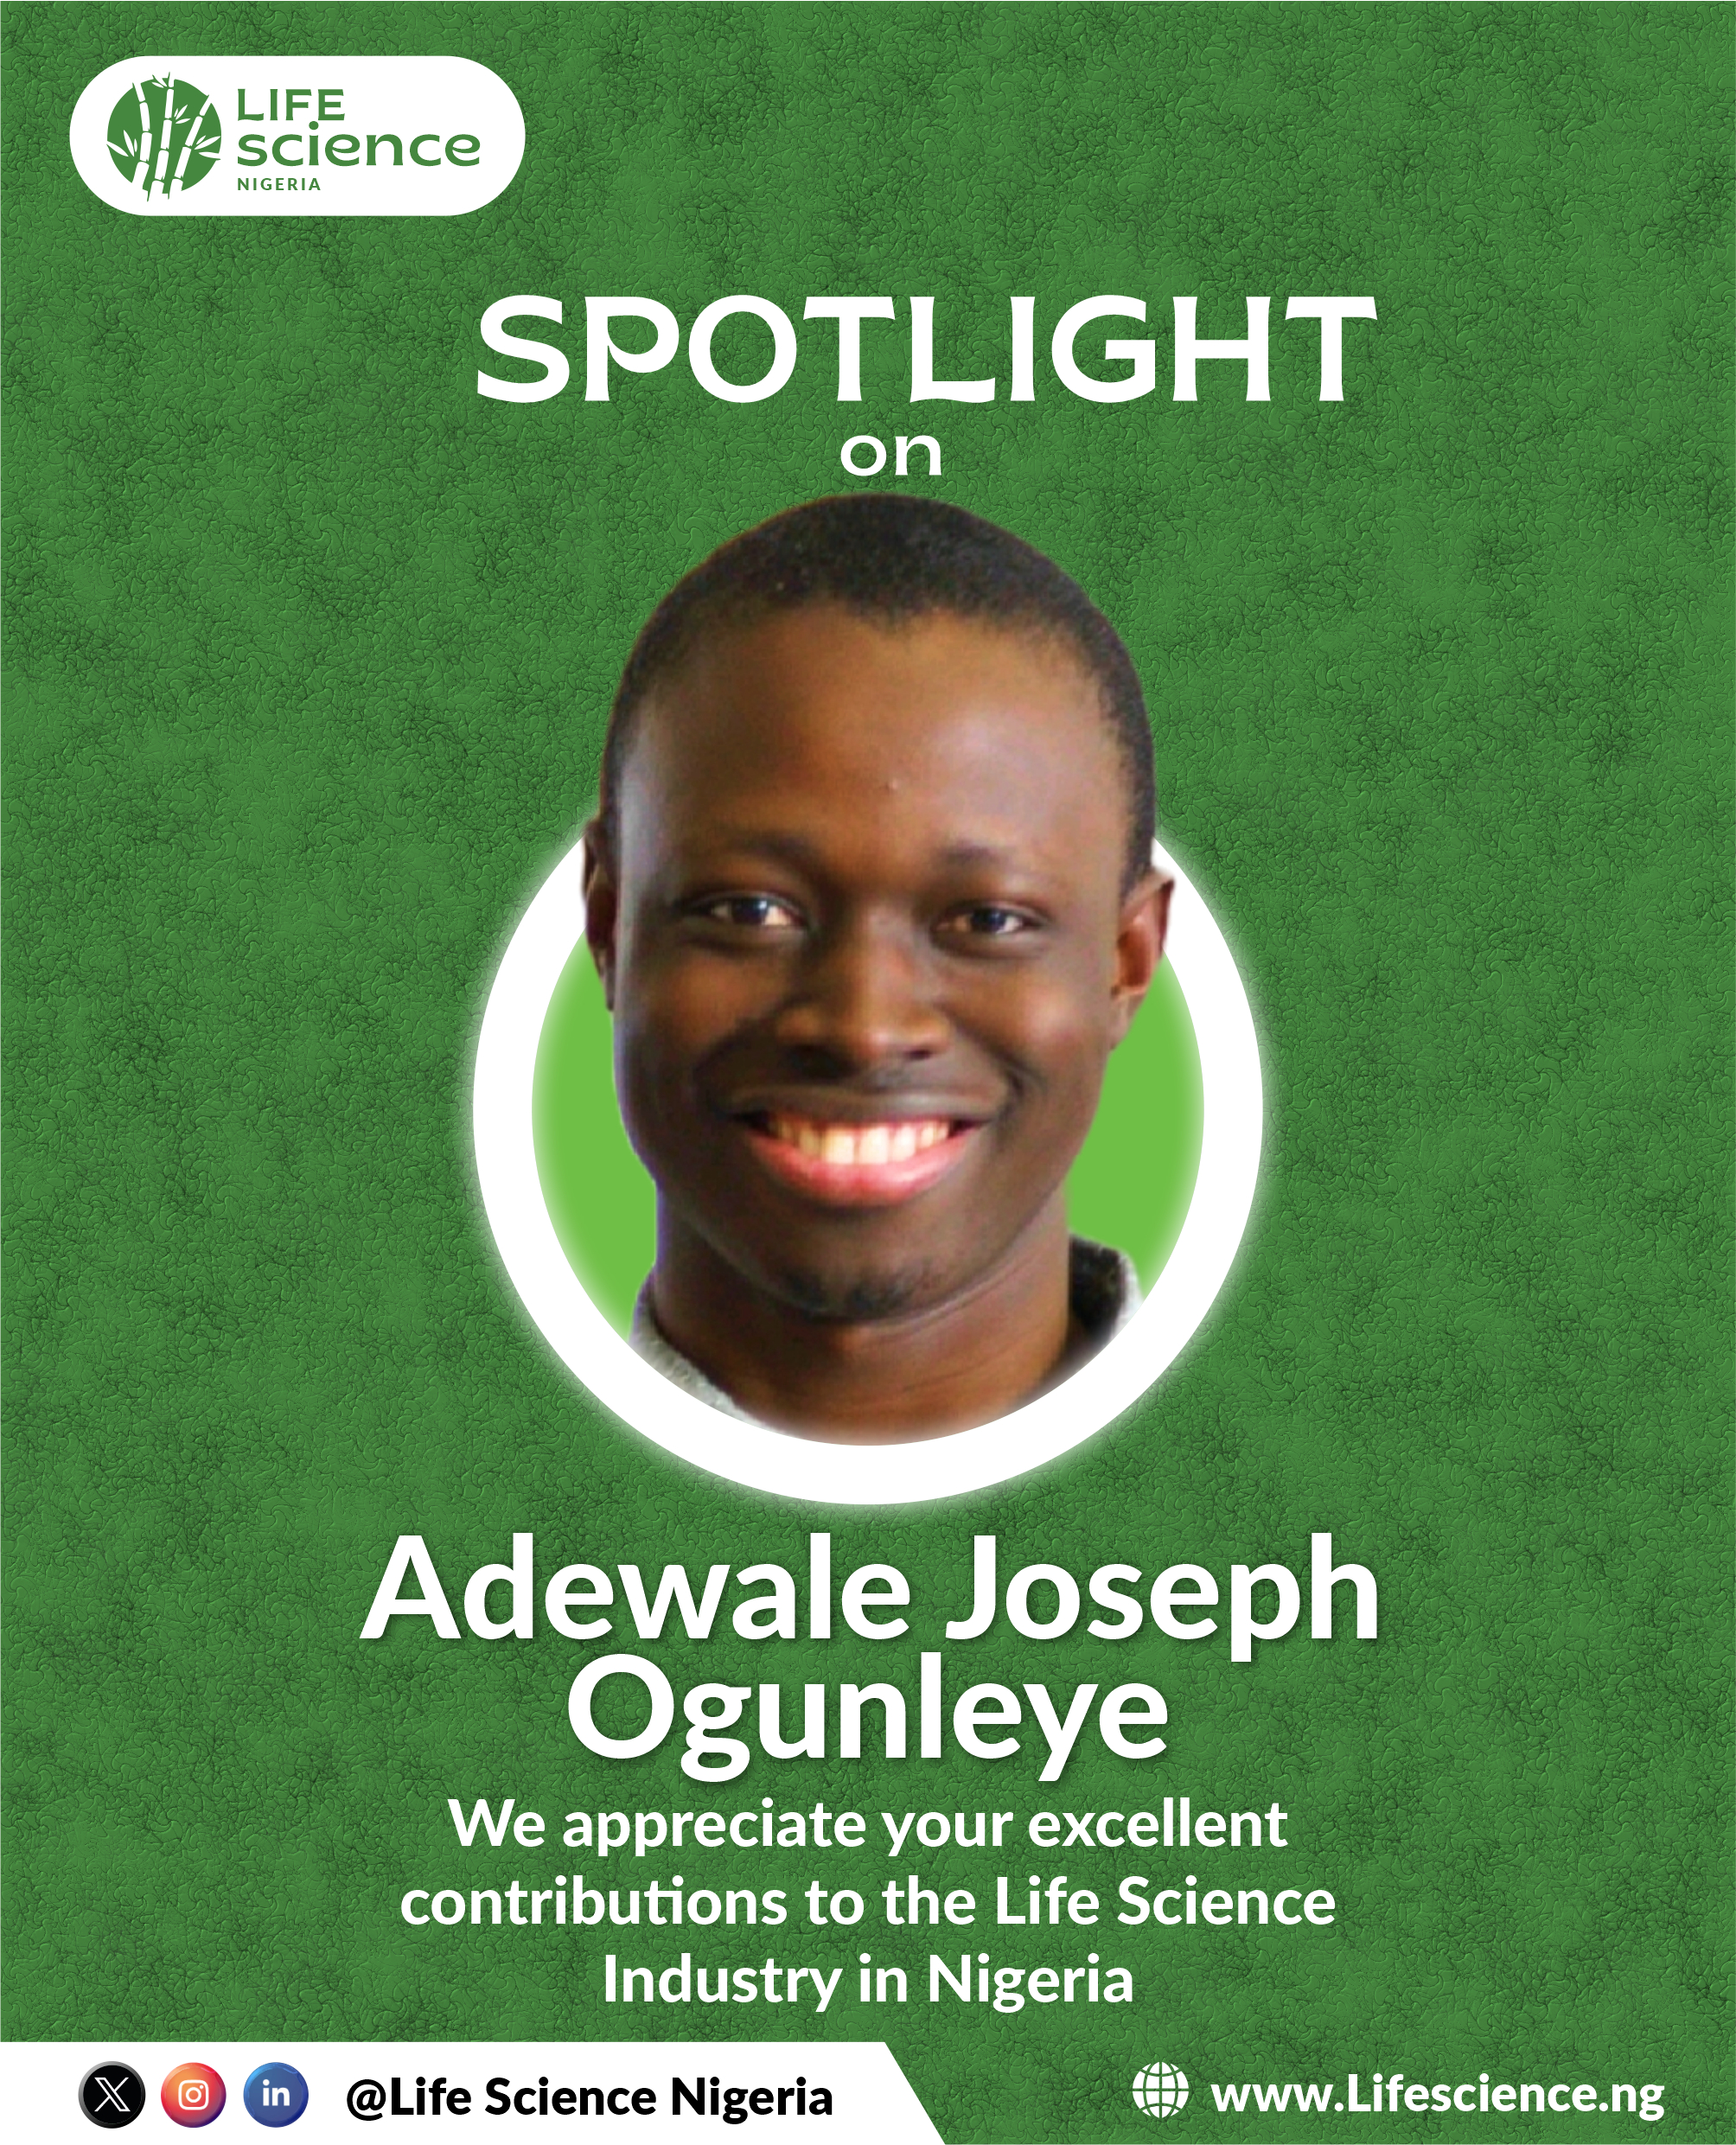 ADEWALE JOSEPH OGUNLEYE |LIFE SCIENCE NIGERIA SPOTLIGHT